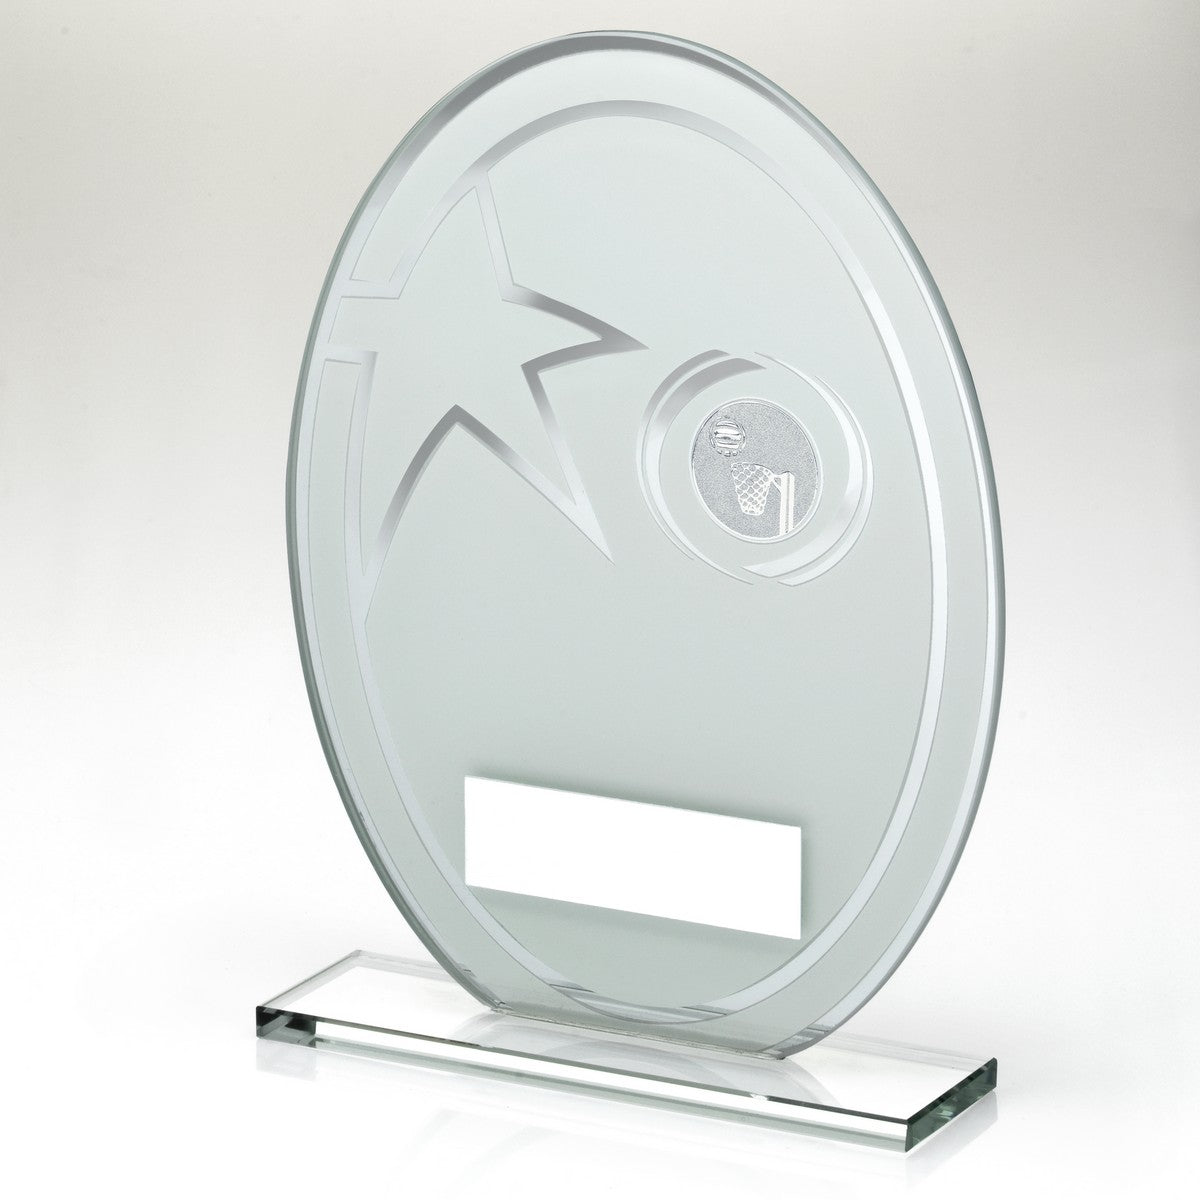 Glass Netball Oval Trophy